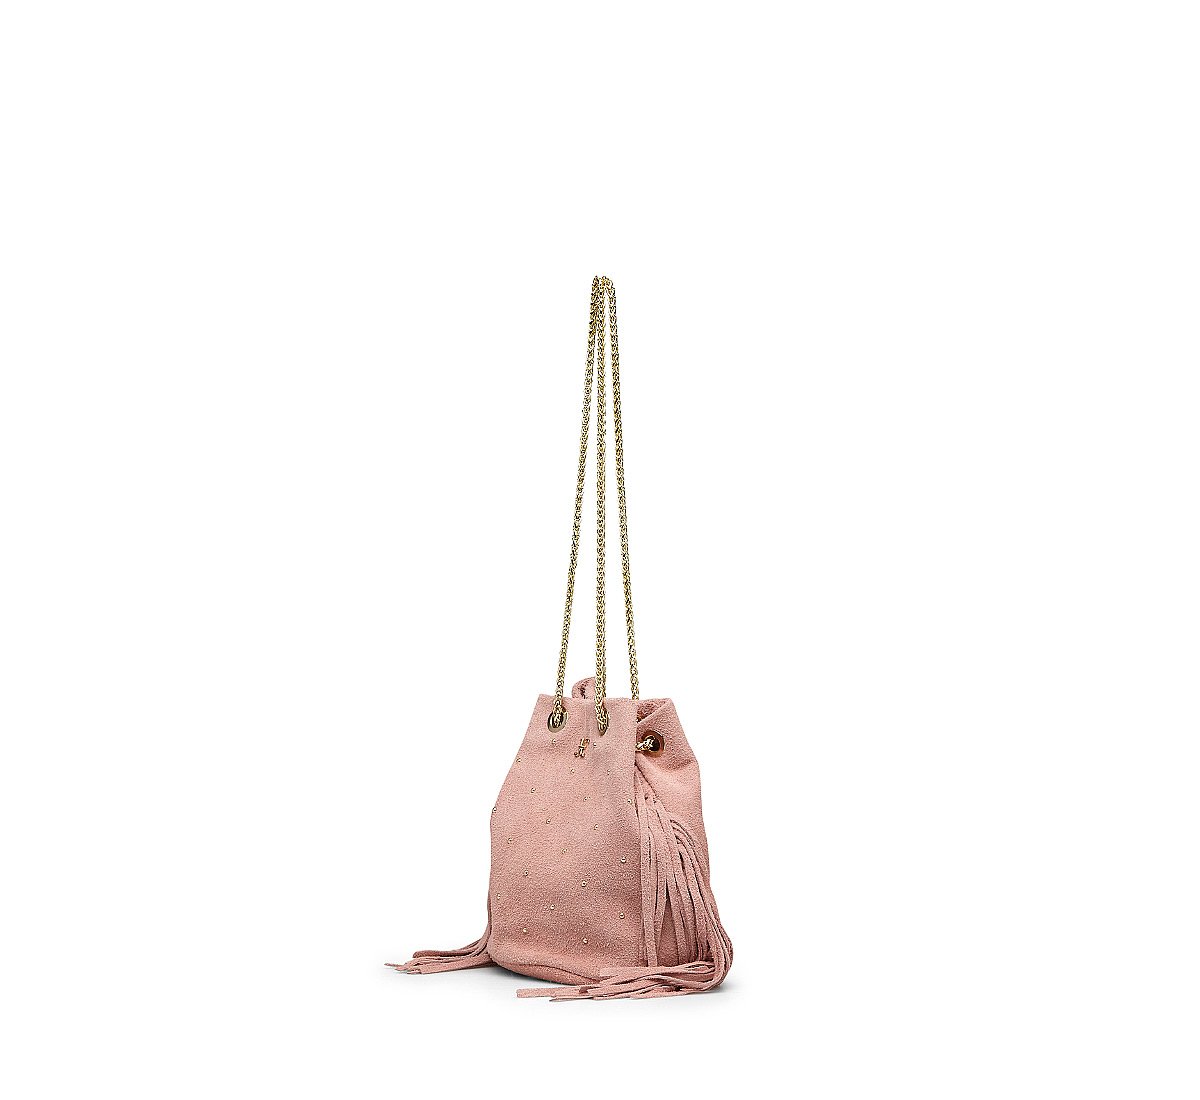 Suede mini bag with shoulder strap